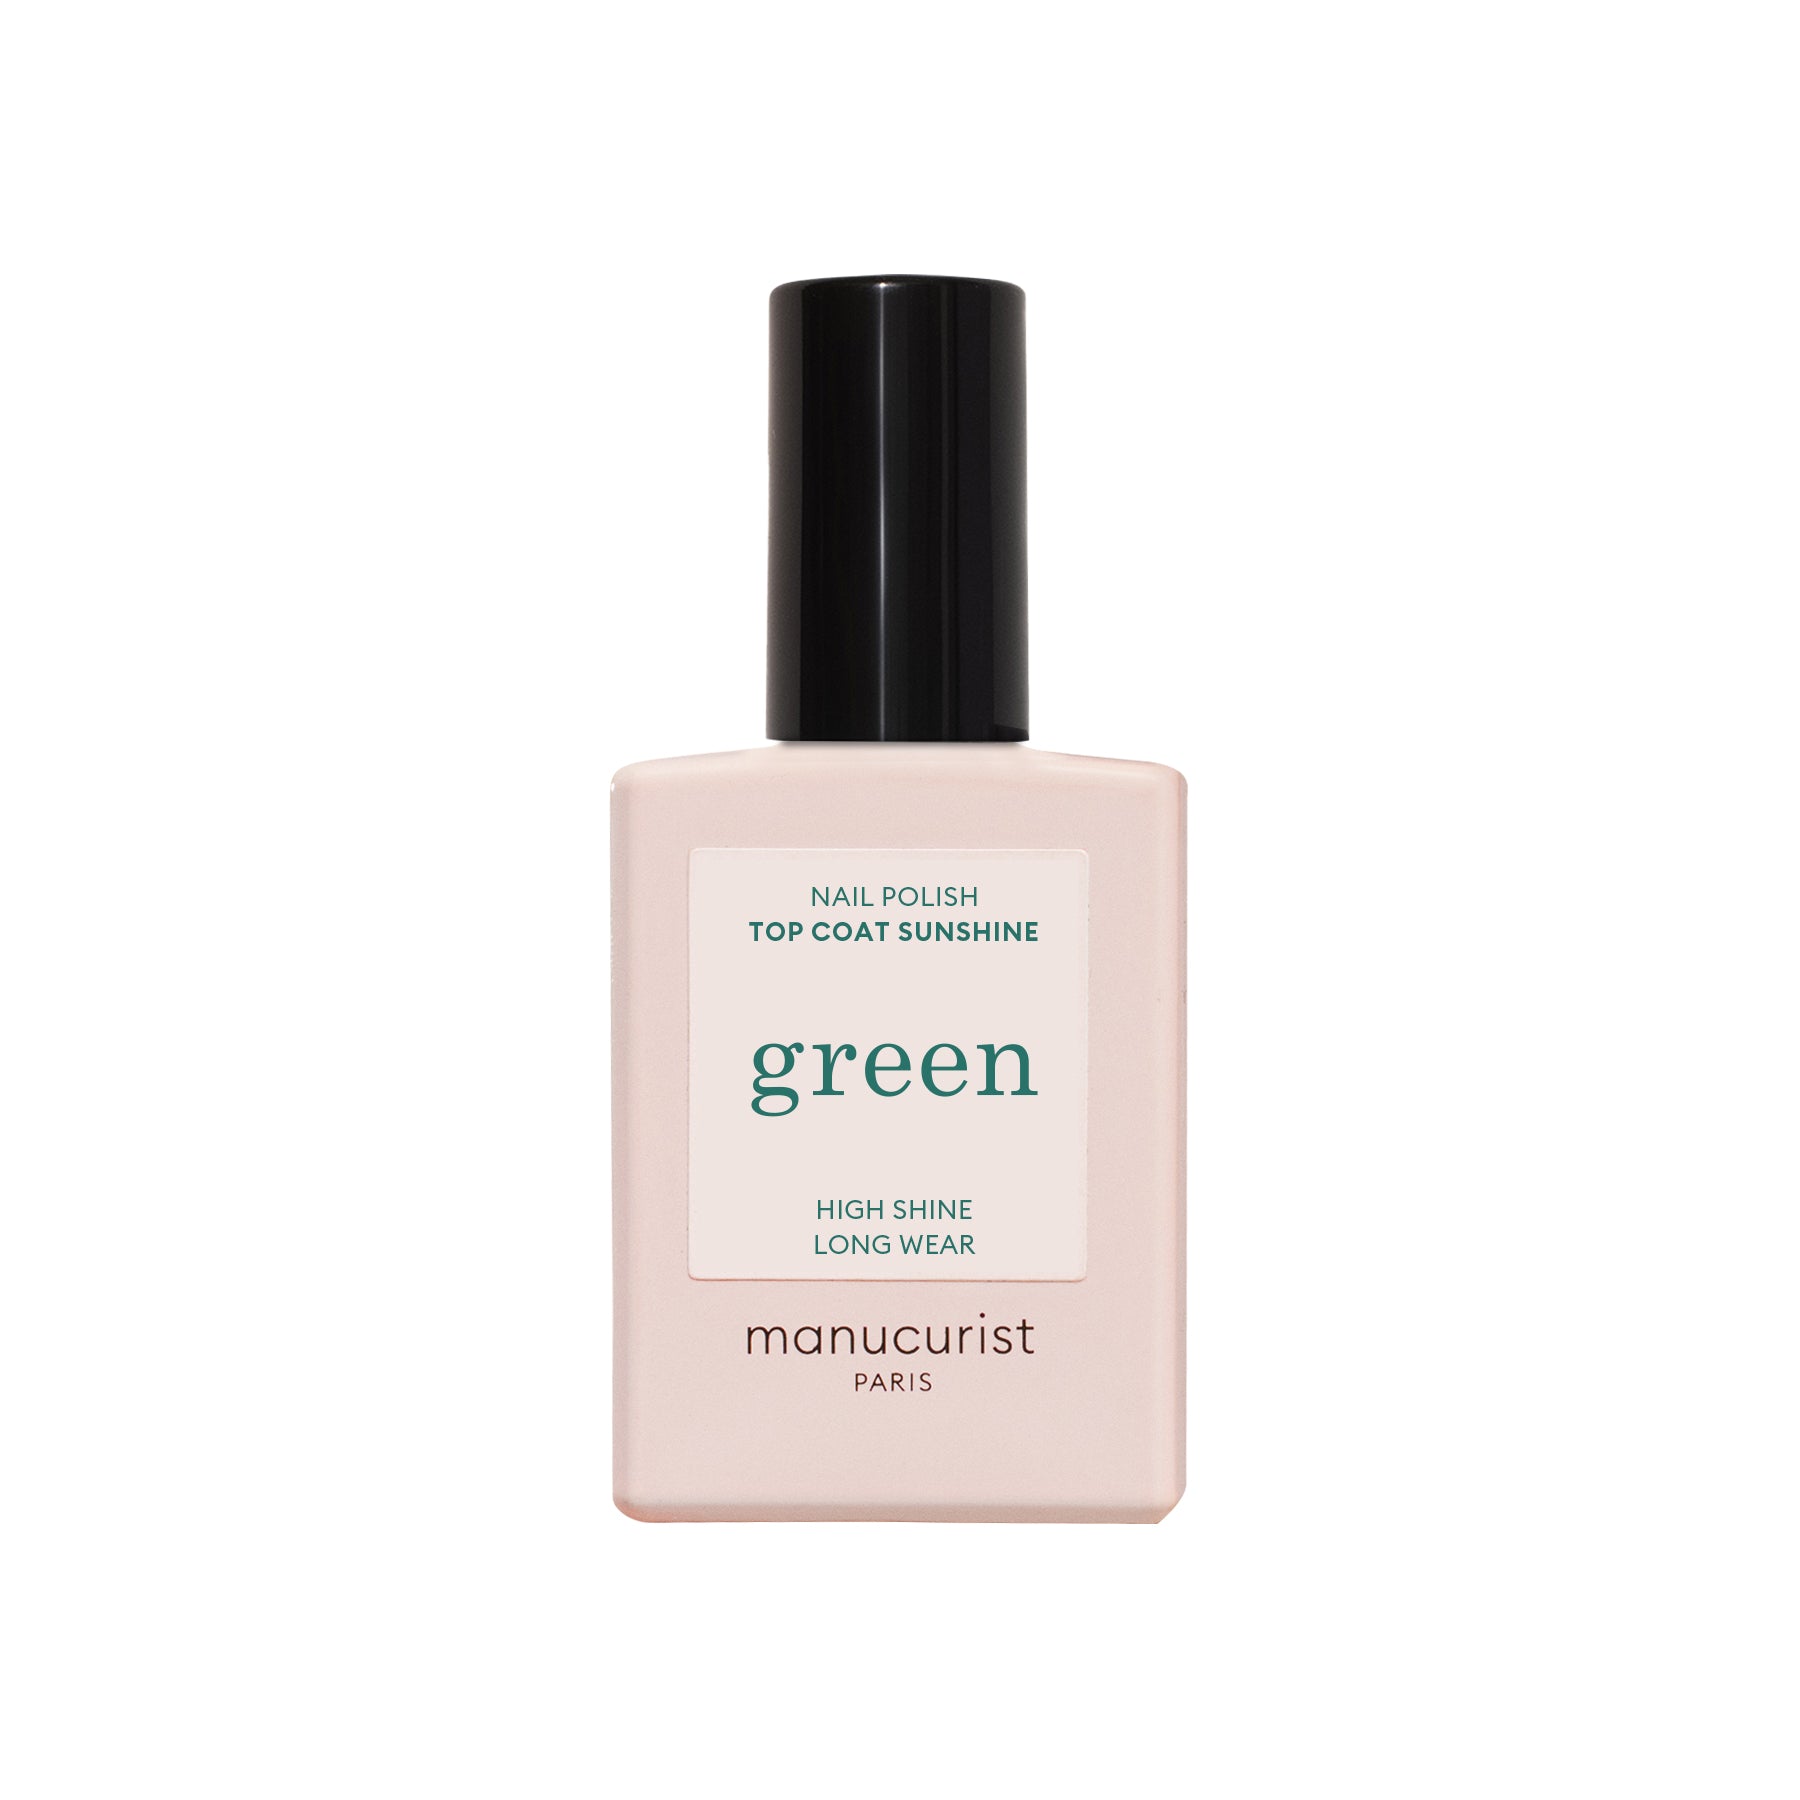 Manucurist Green lak na nehty vrchní - Top Coat Sunshine (15 ml) - efekt gelových nehtů Manucurist